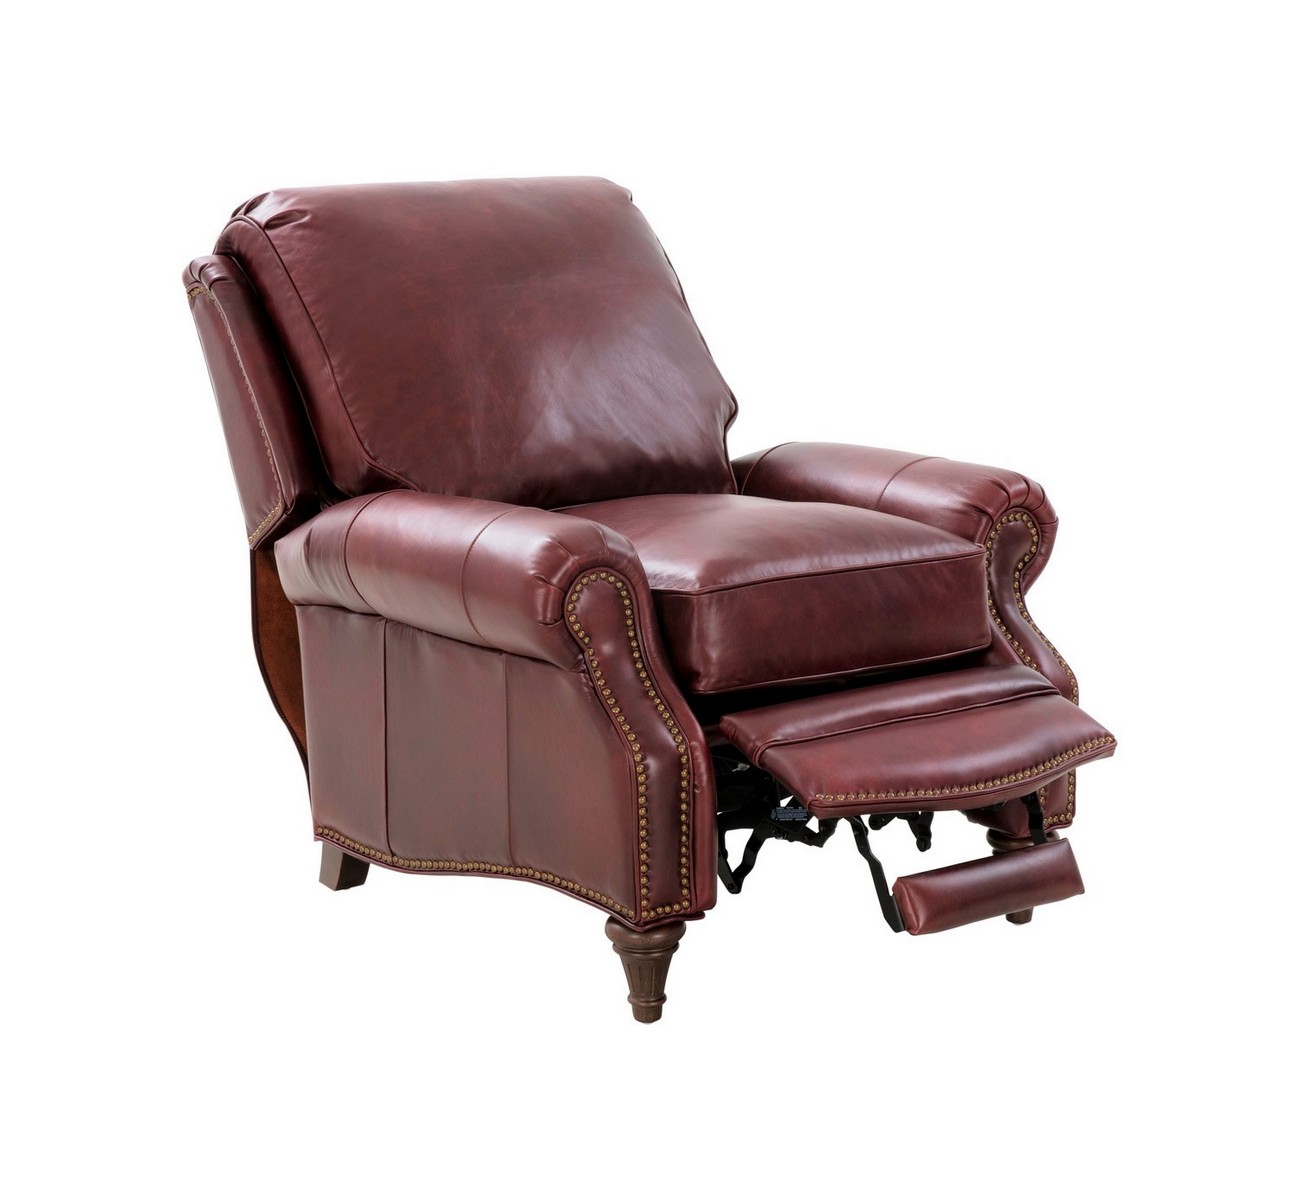 Barcalounger Avery Recliner Chair - Emerson Sangria/Top Grain Leather